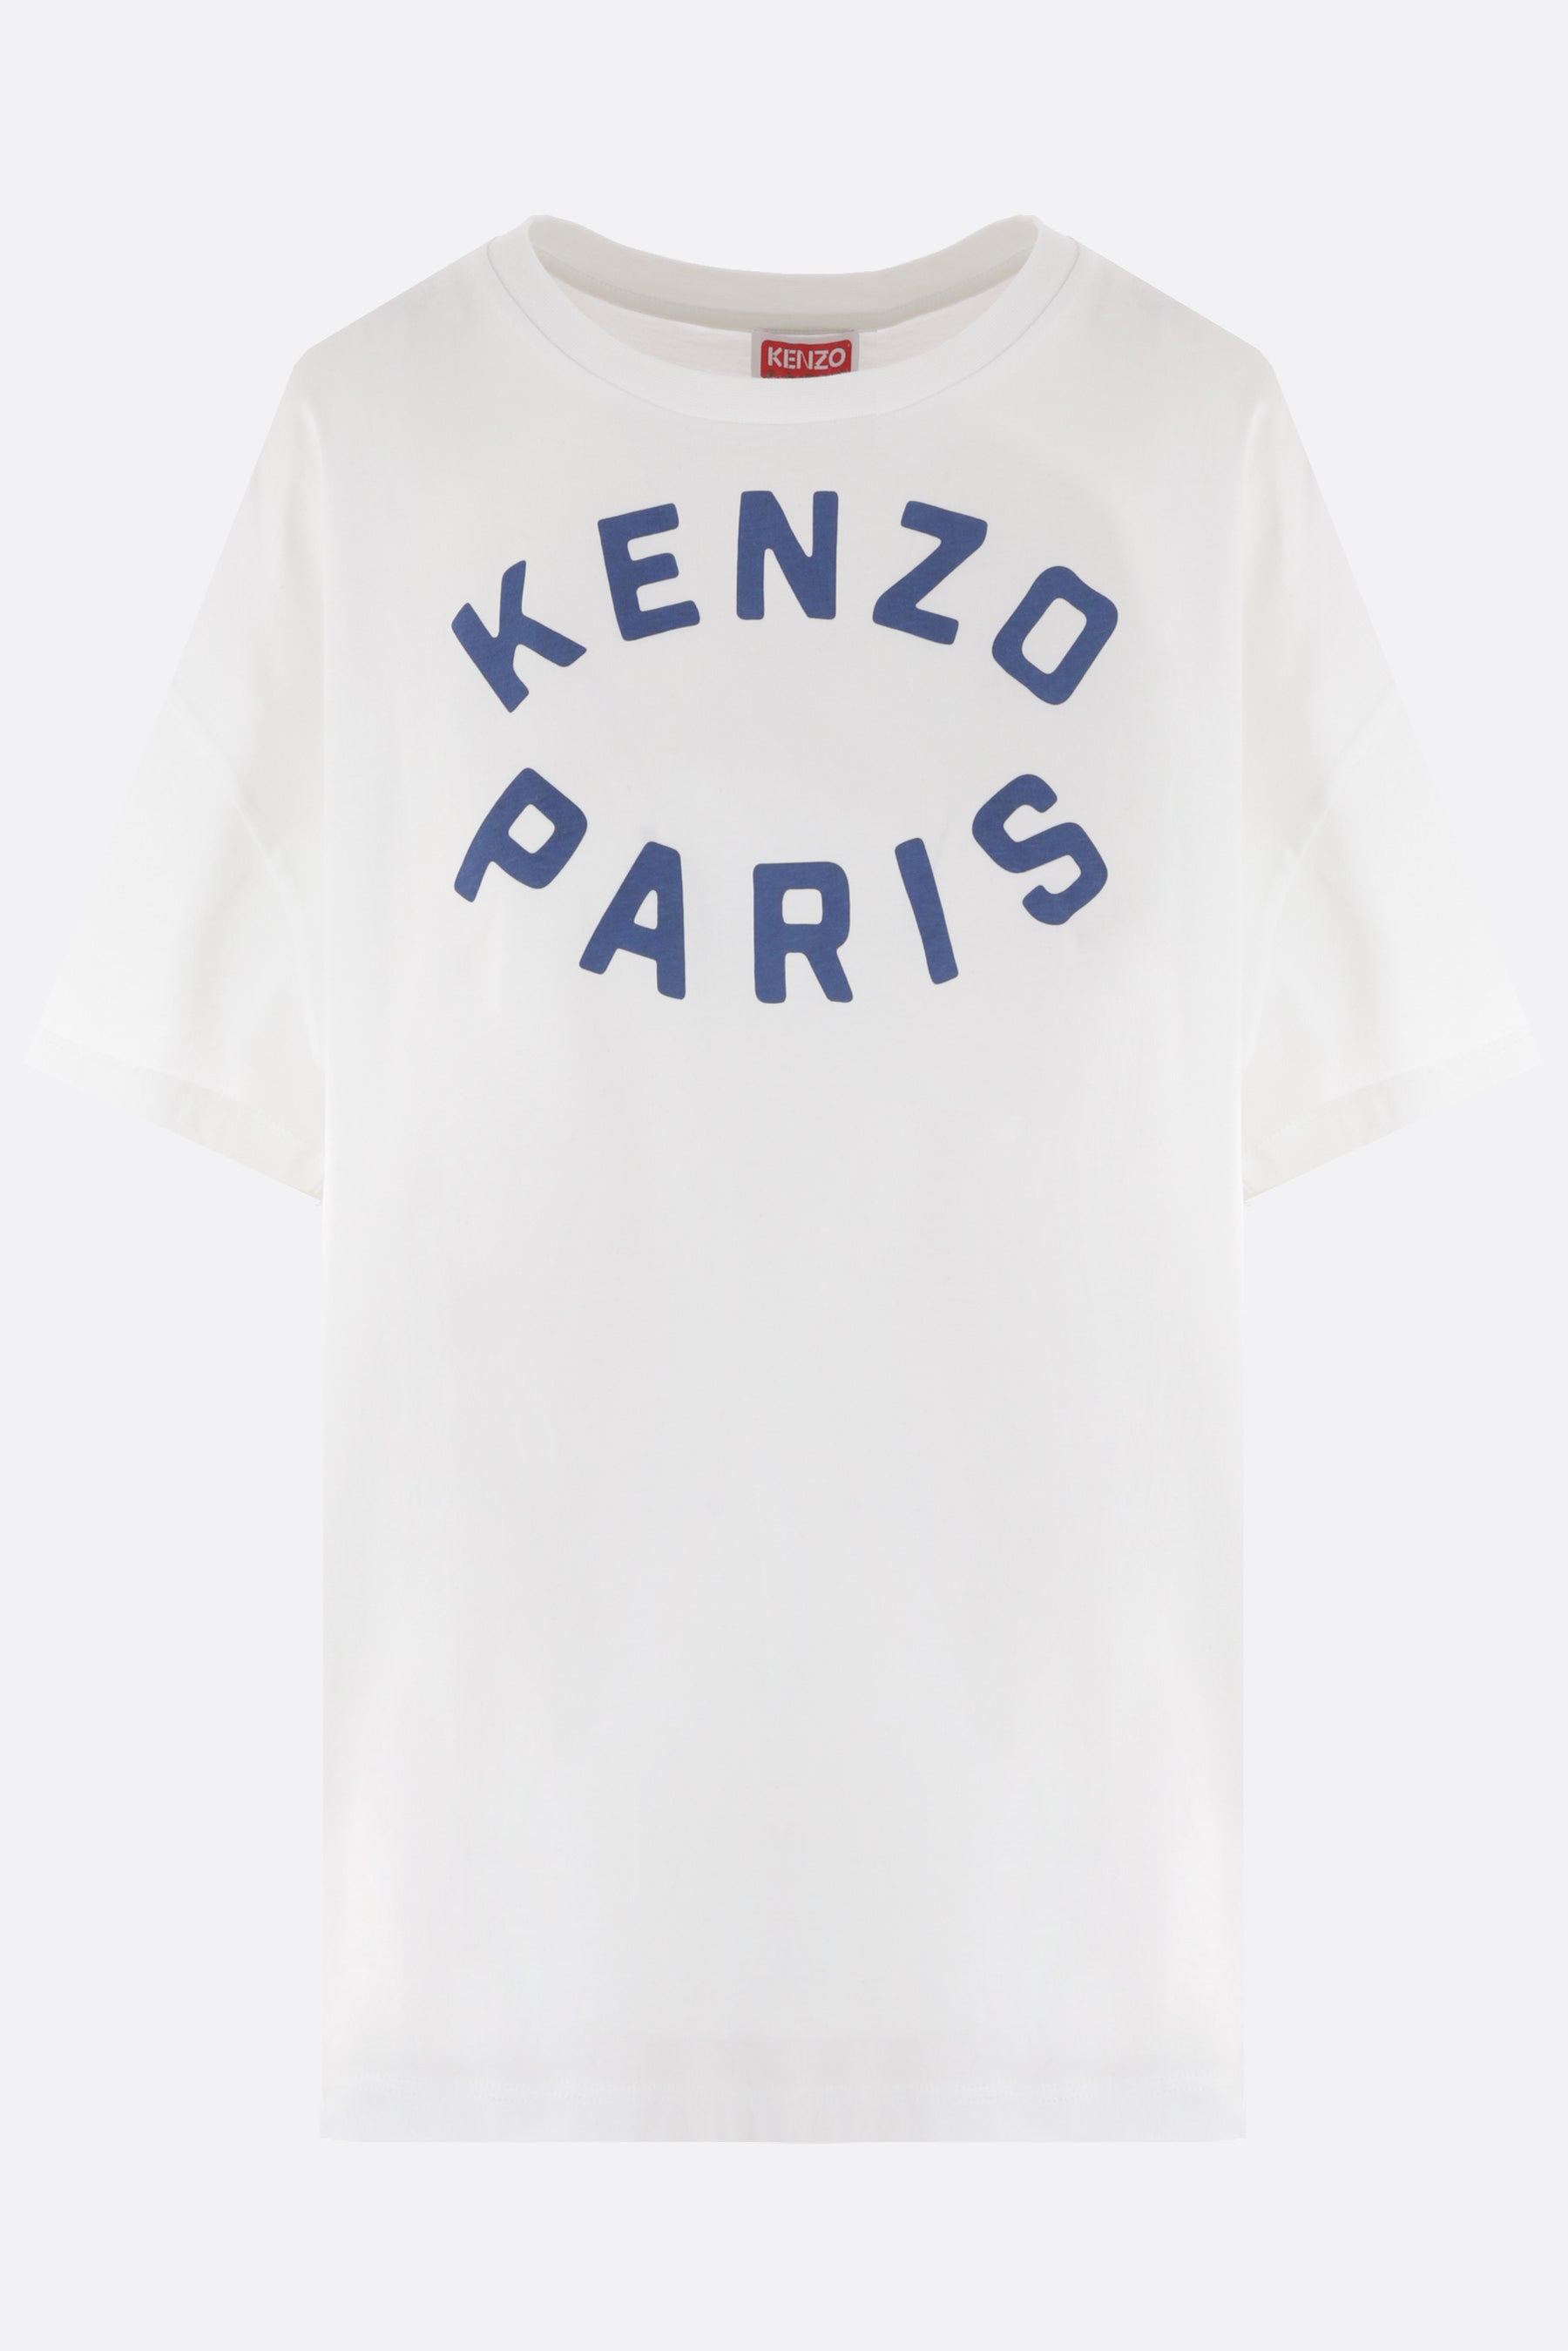 Kenzo Target cotton t-shirt